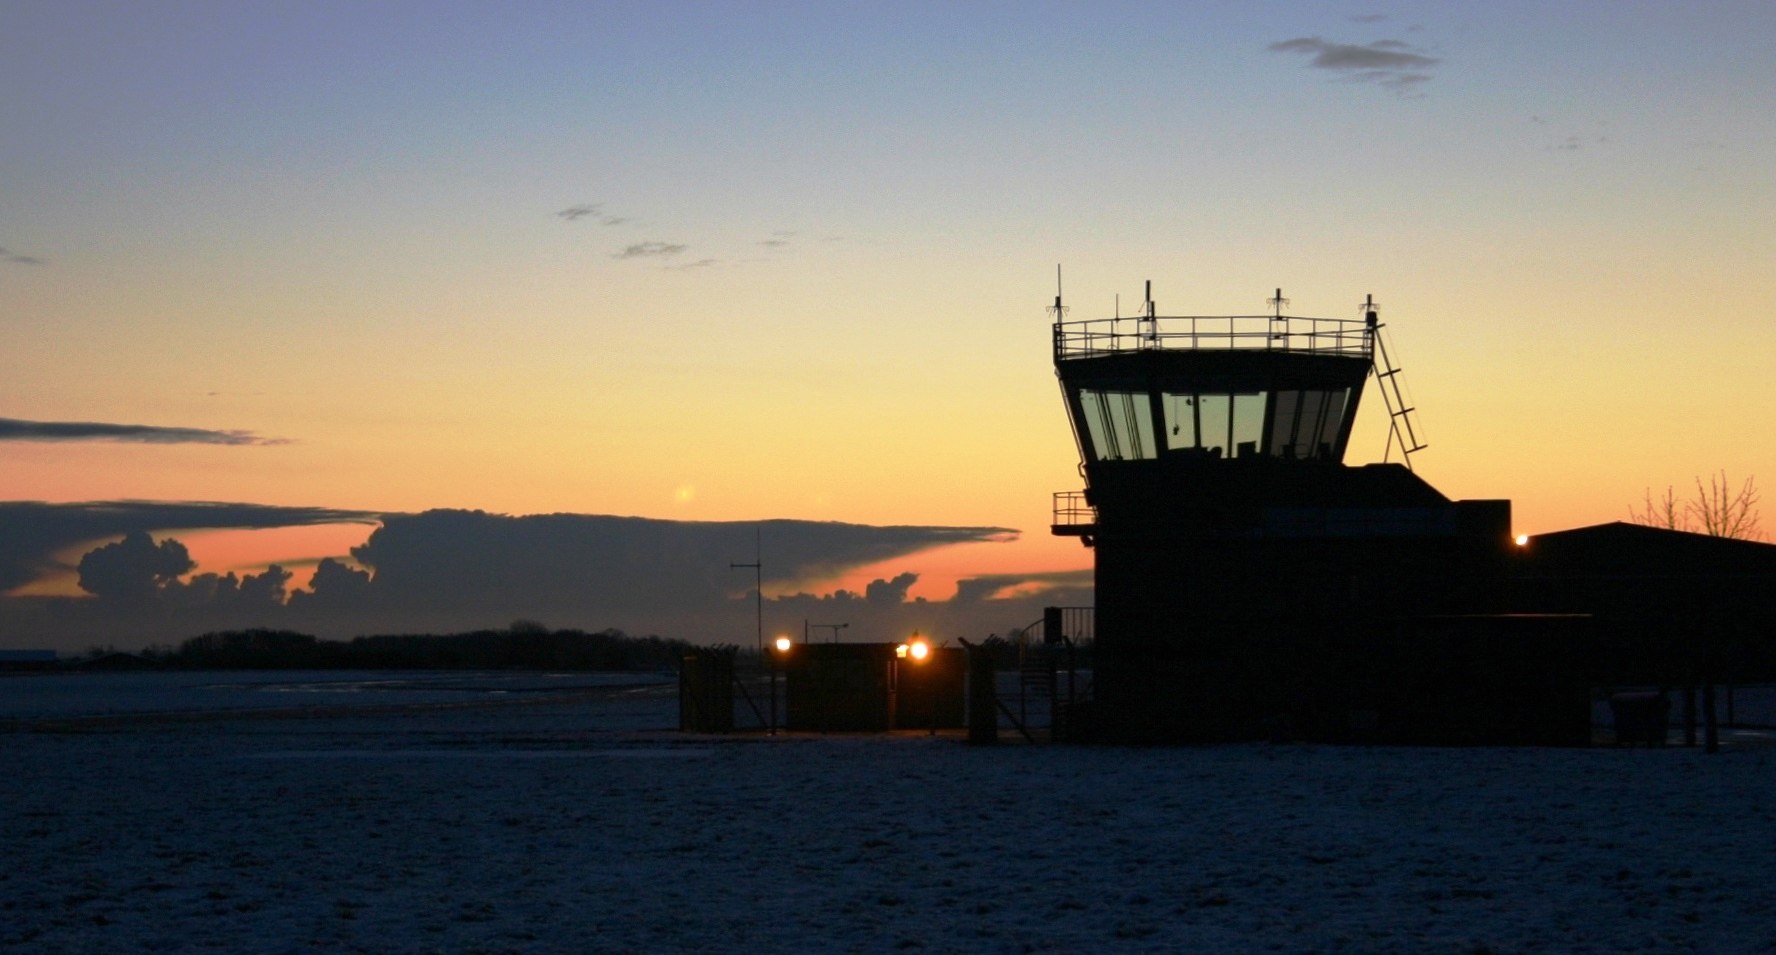 An ATC tower at dusk.